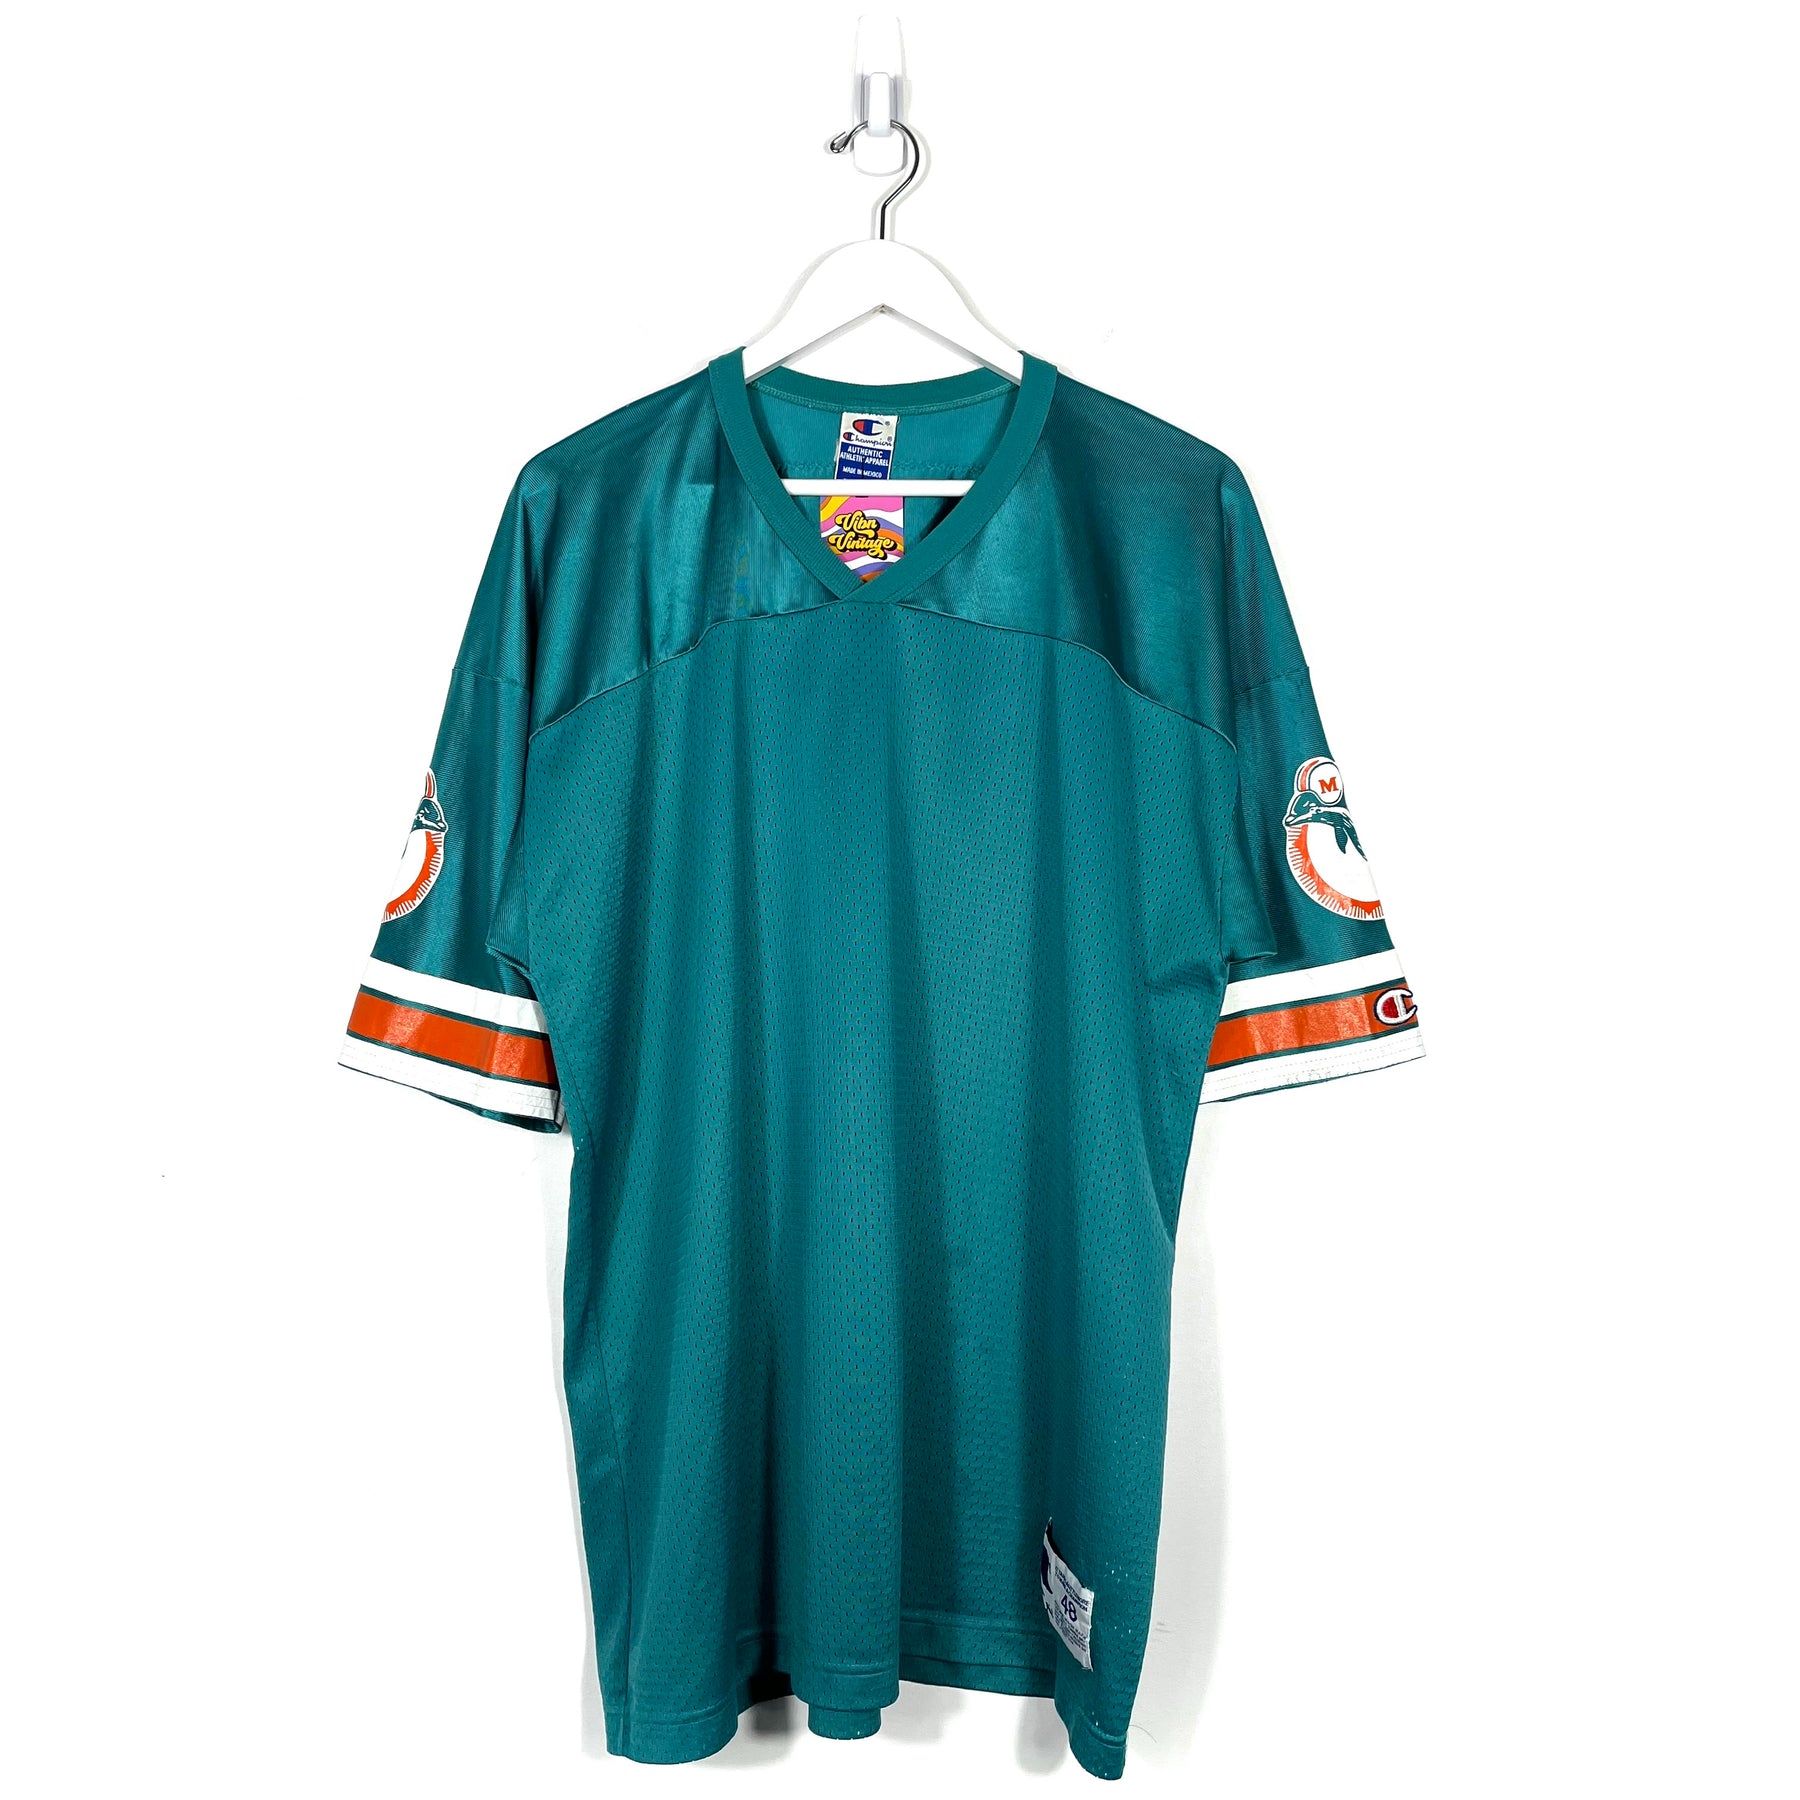 Vintage Champion NFL Miami Dolphins Jersey - Men's XL